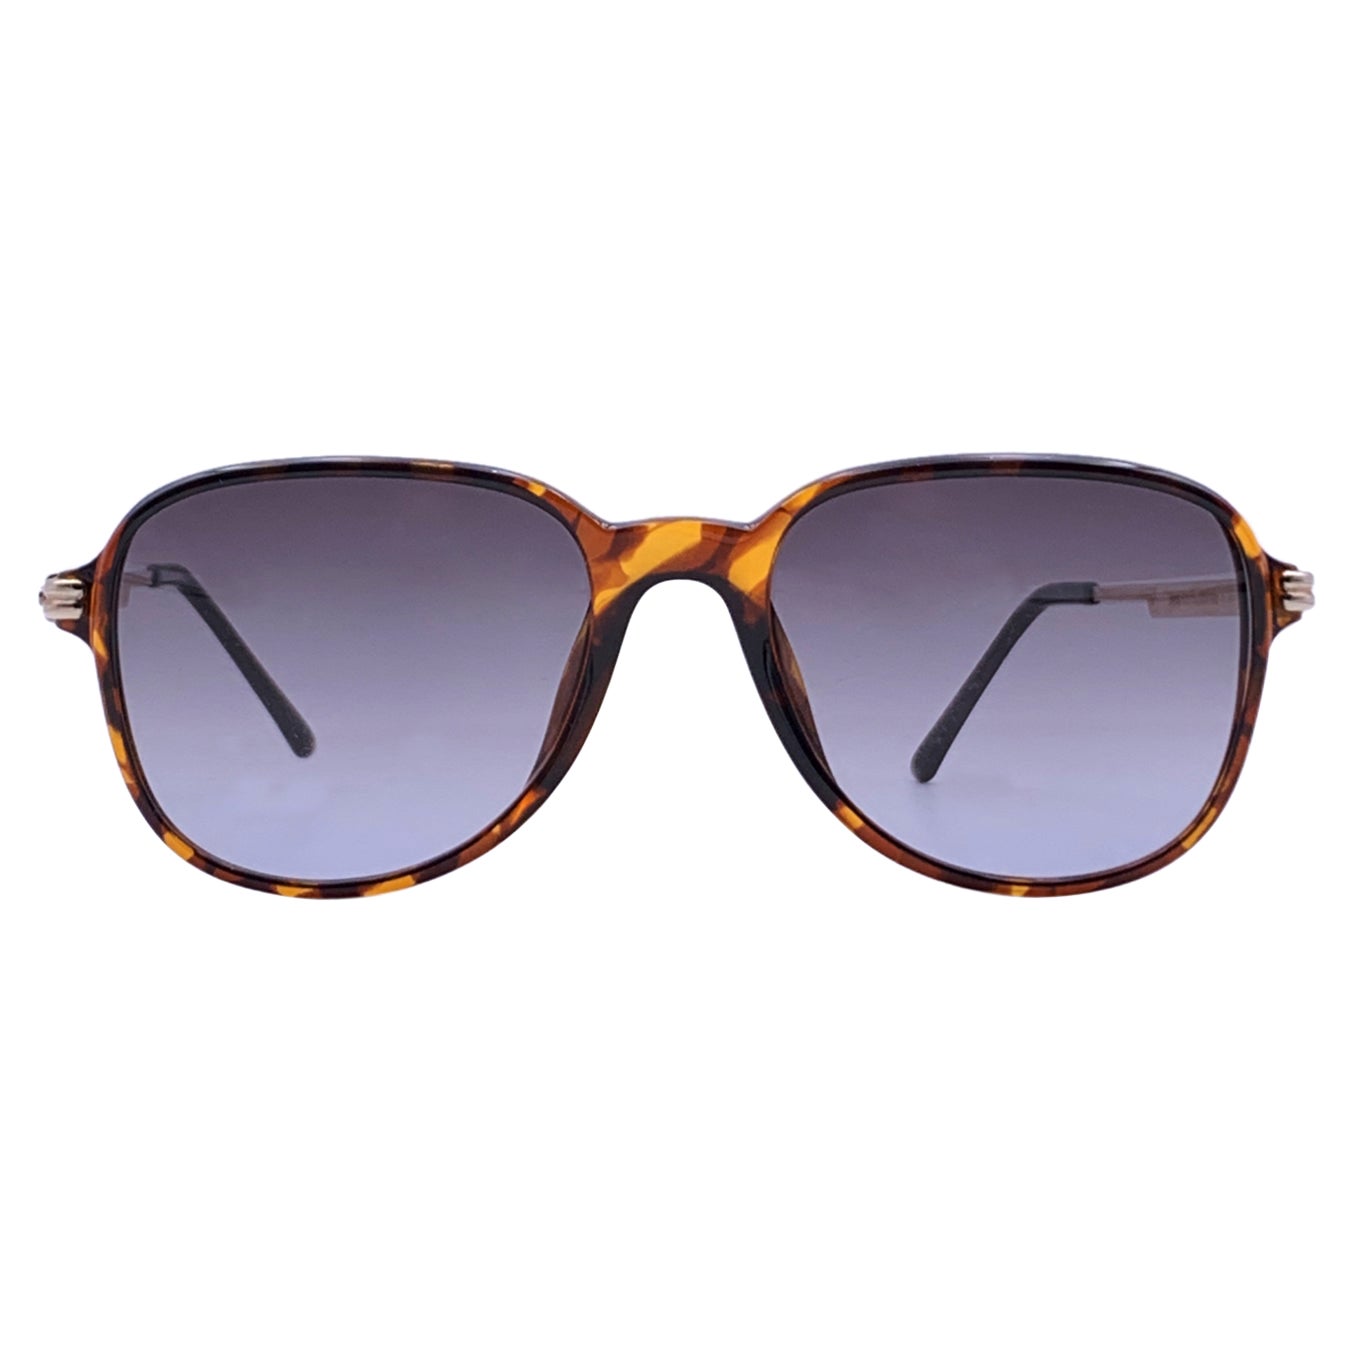 Christian Dior Vintage Brown Acetate Sunglasses 2522 54-18 130 mm